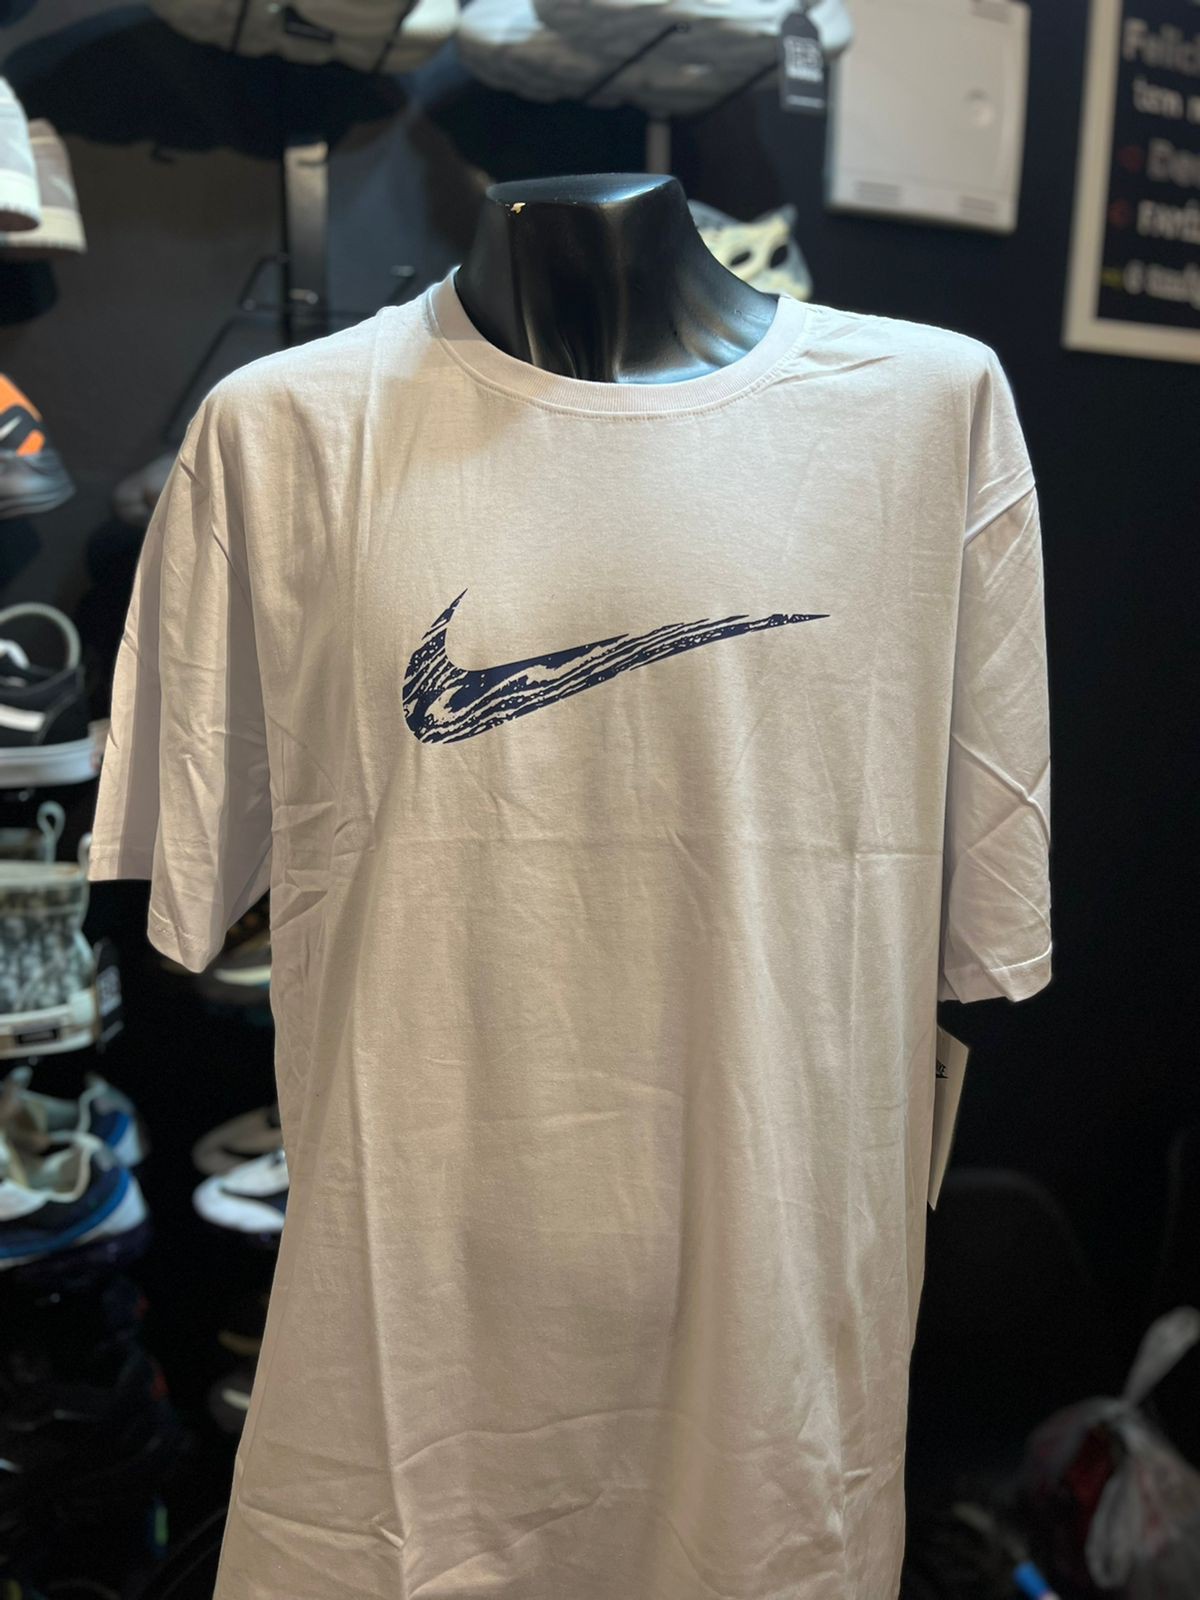 Camiseta Nike Big swoosh Branca - Pronta Entrega - Rabello Store - Tênis,  Vestuários, Lifestyle e muito mais